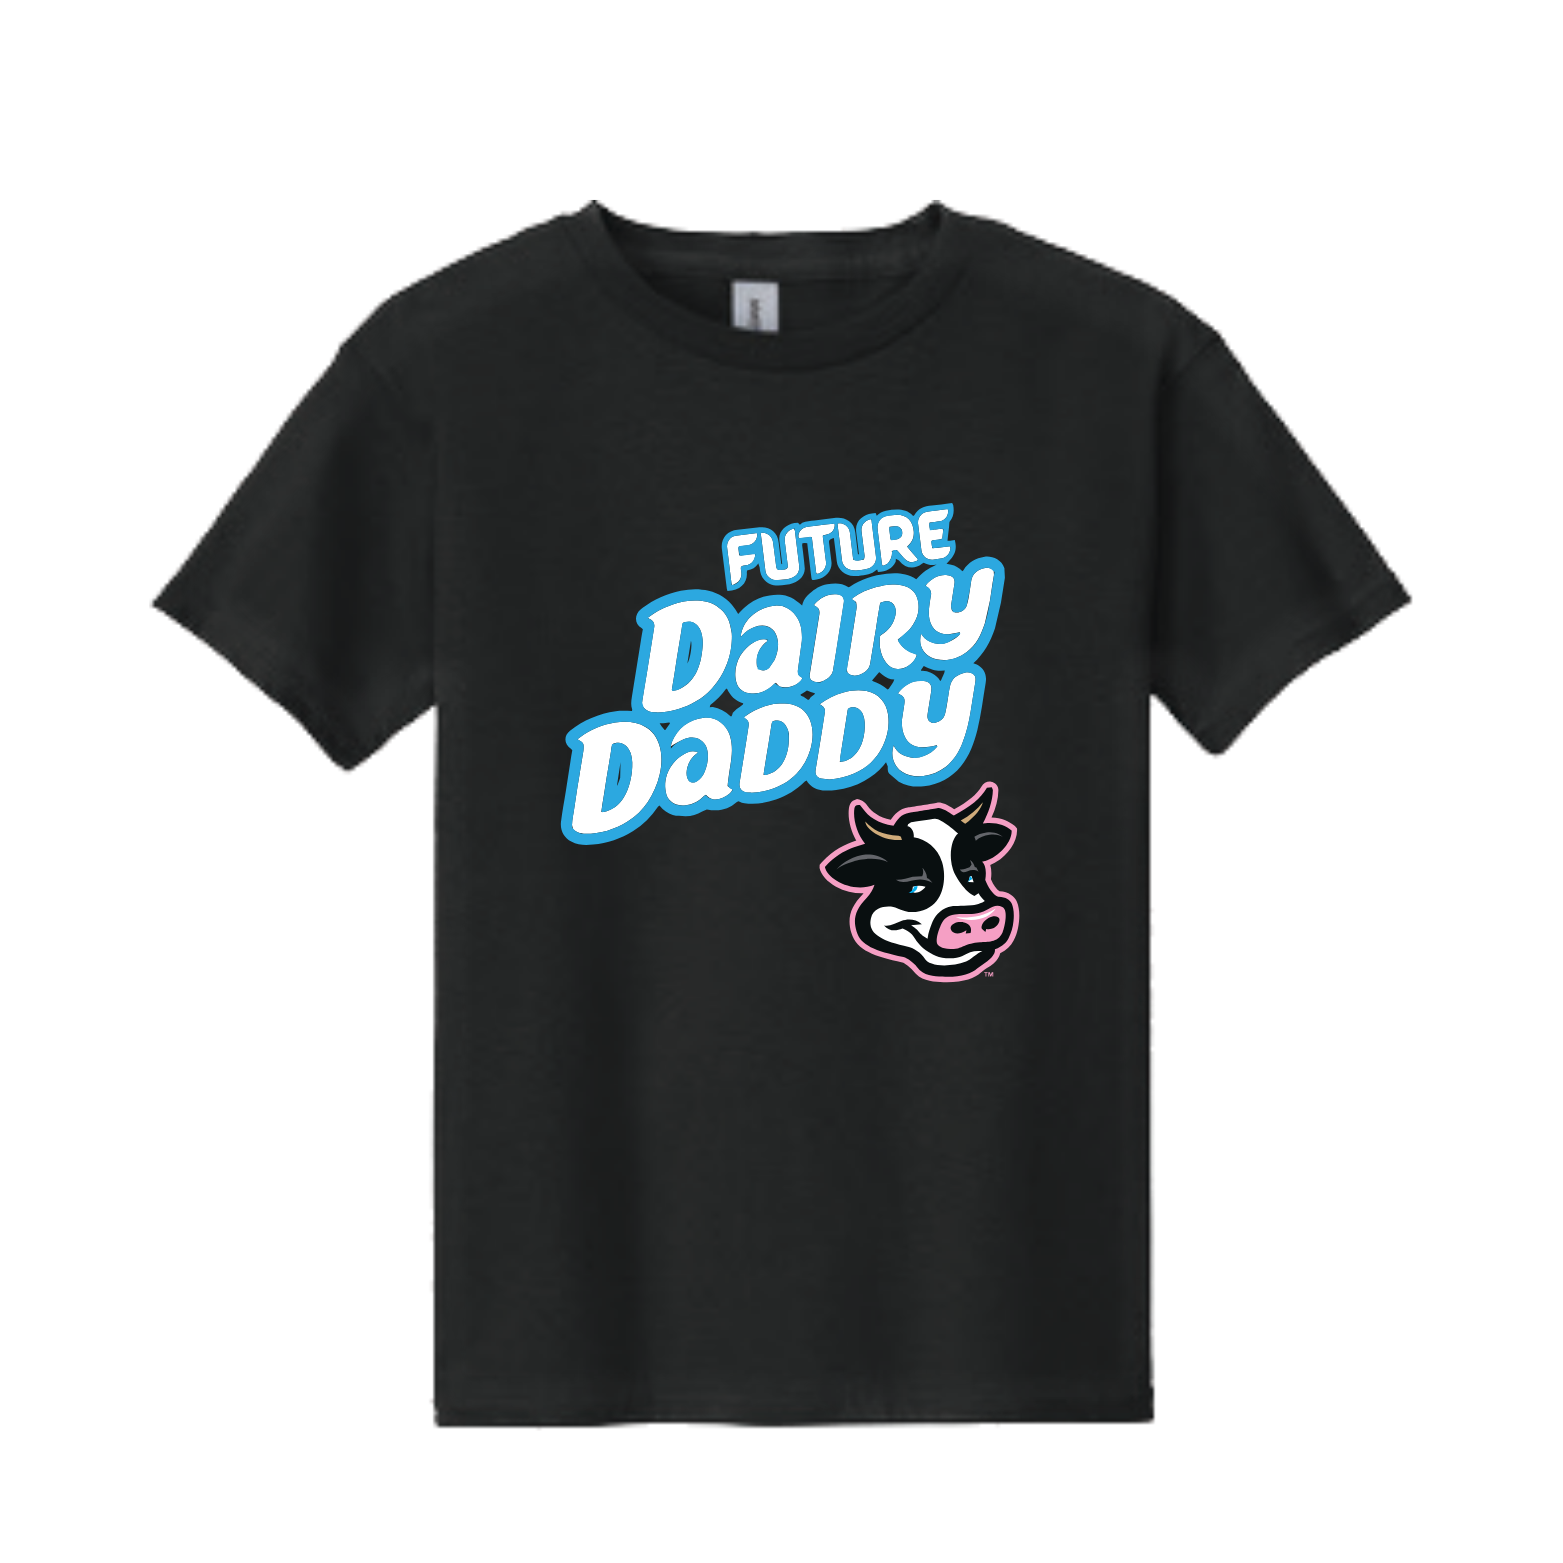 Dairy Daddies Youth T - Future Dairy Daddy-0